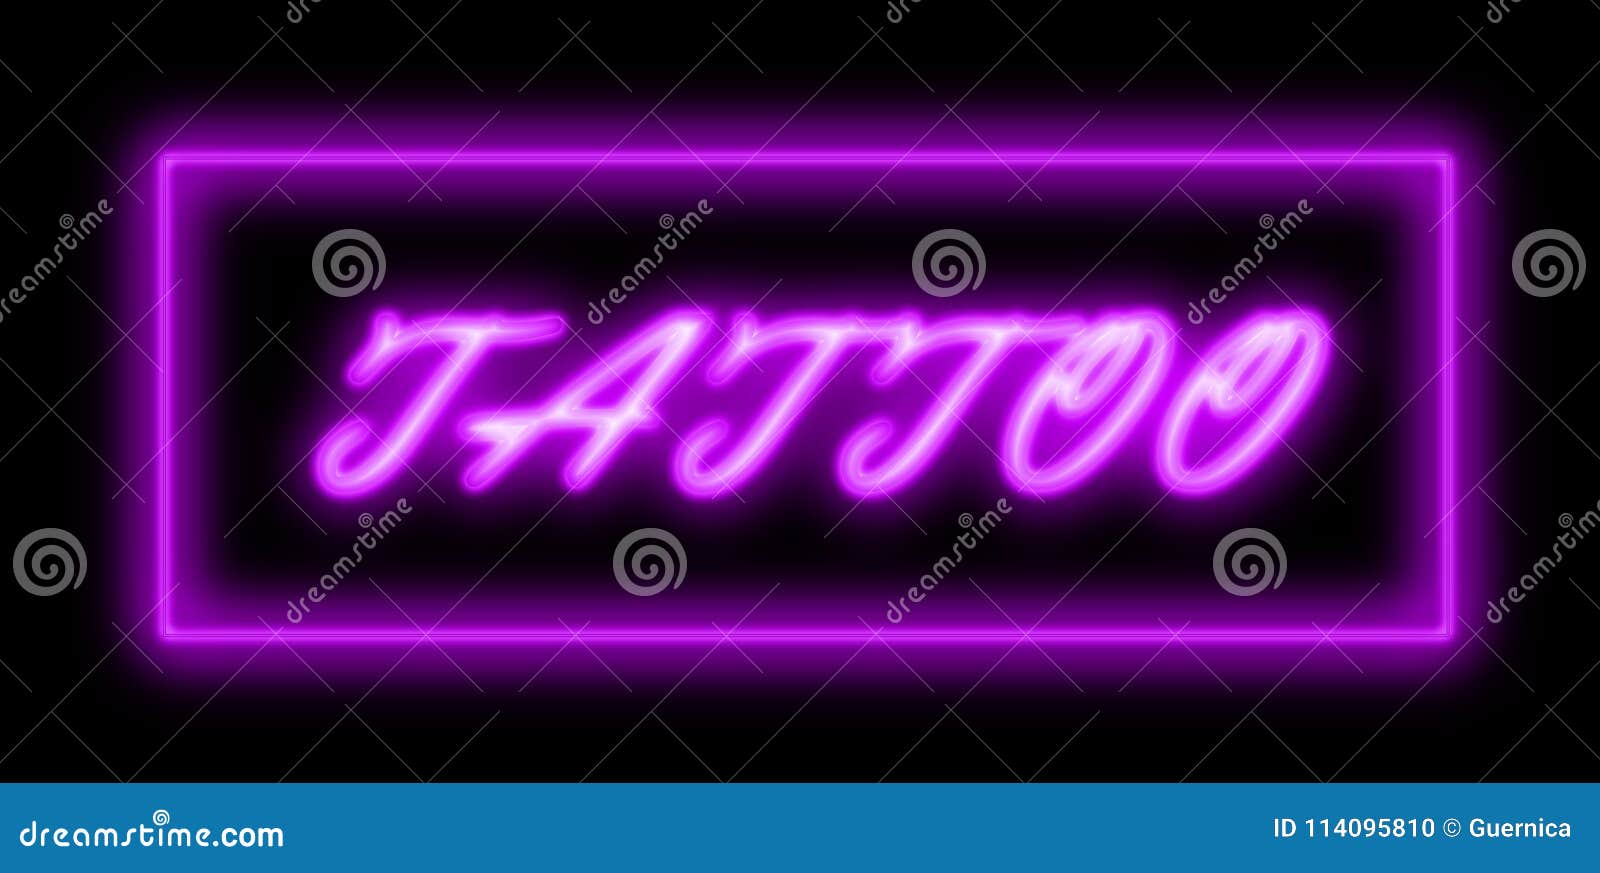 Tattoo salon logo in a neon style neon sign emblem umbrella symbol  light billboards night shining banner neon bright  CanStock